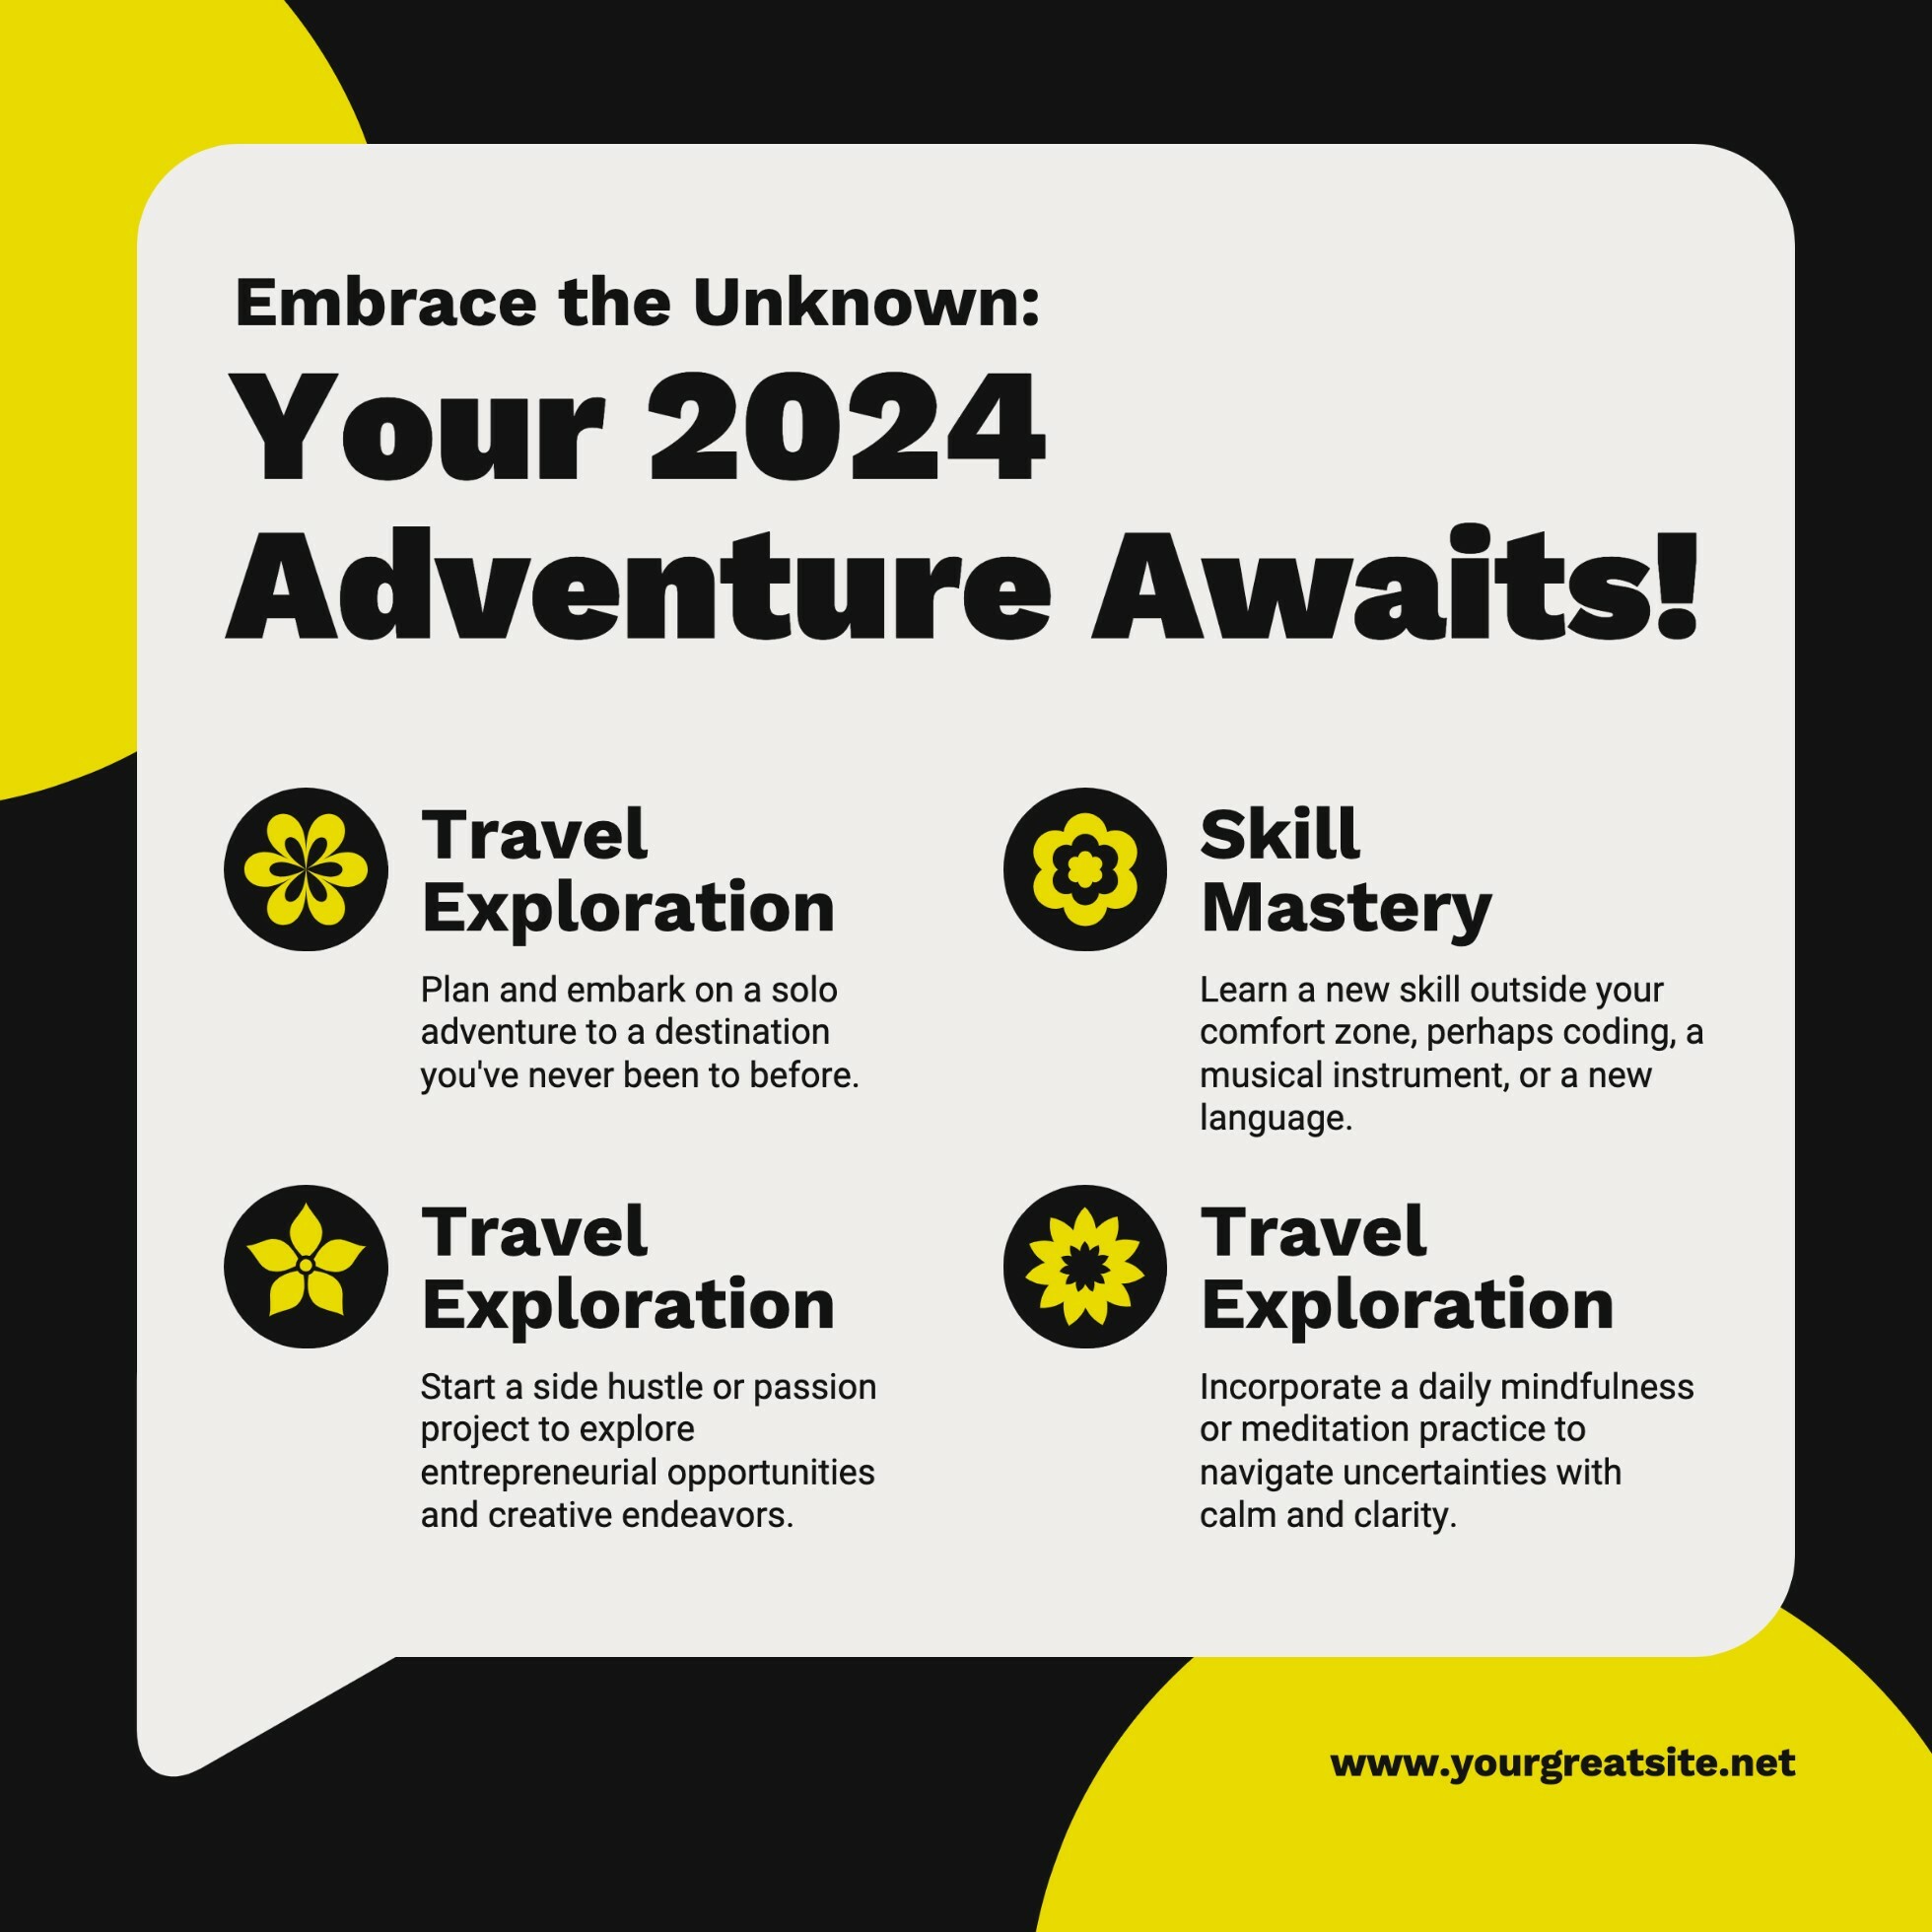 Your 2024 Adventure Awaits